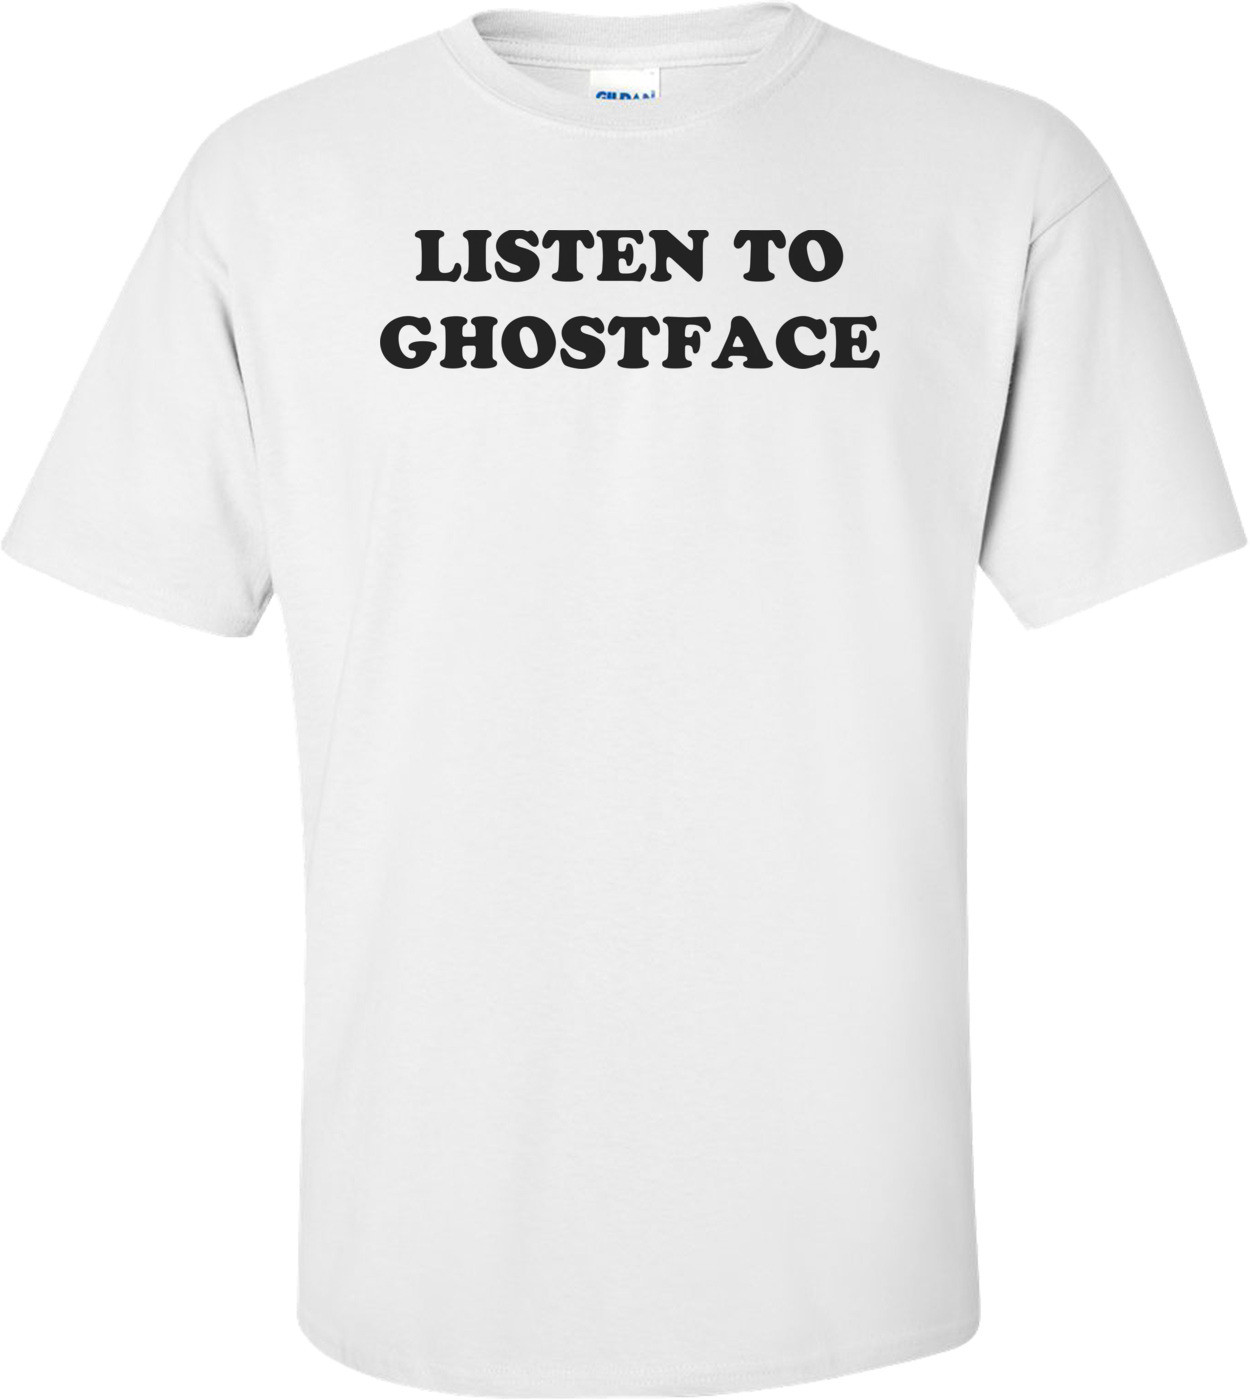 LISTEN TO GHOSTFACE